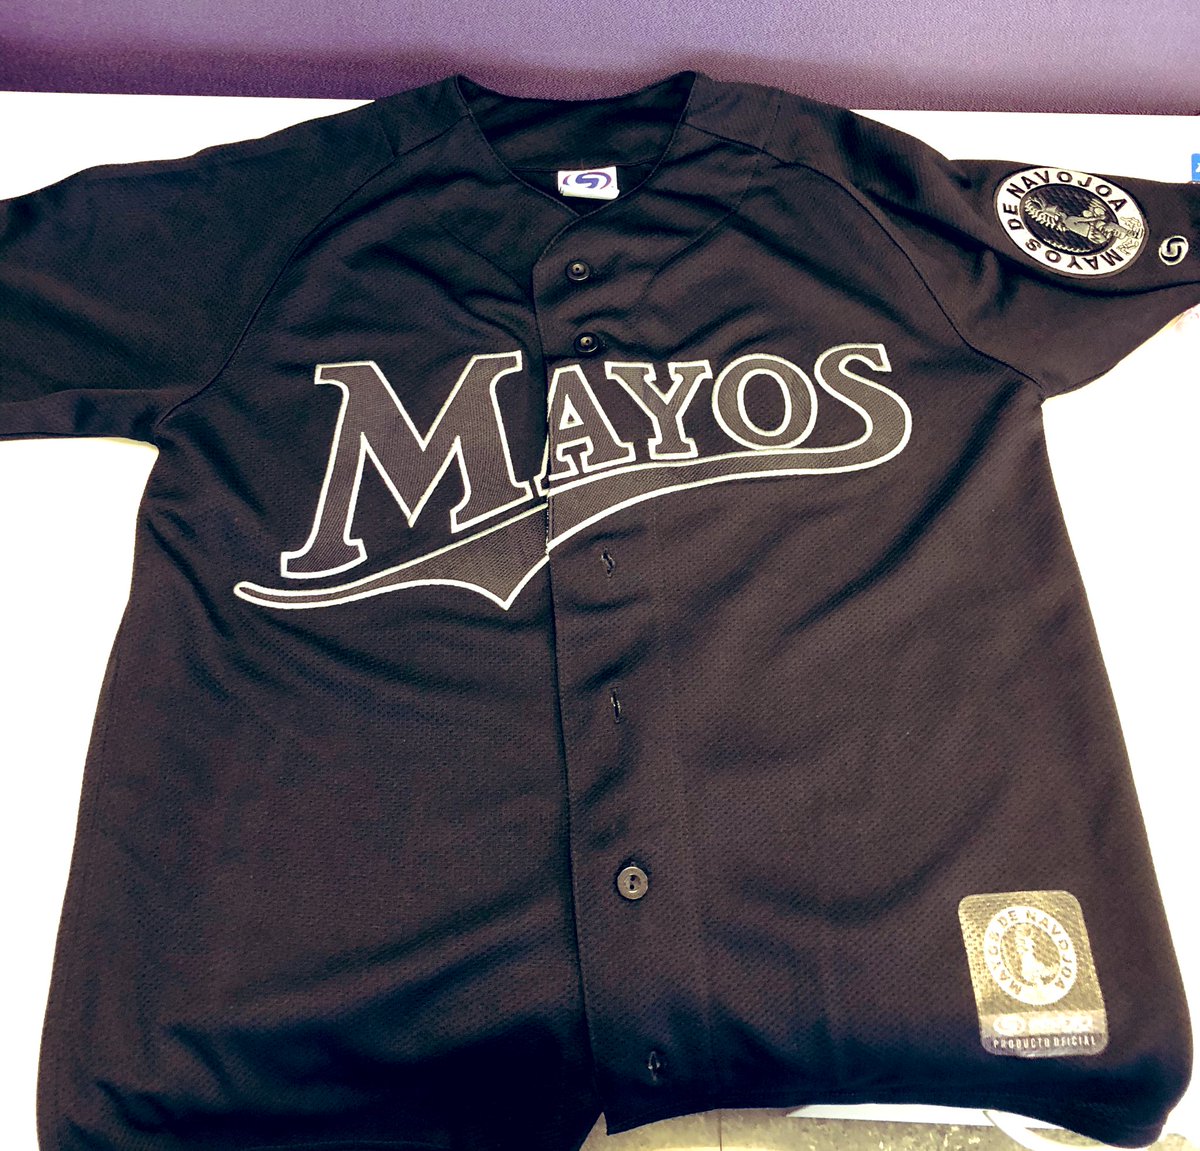 Ya tengo mi jersey @OficialMayos @LMPbeisbol #LMP #VamosMayos  ⚾️👏🏻🙌🏻